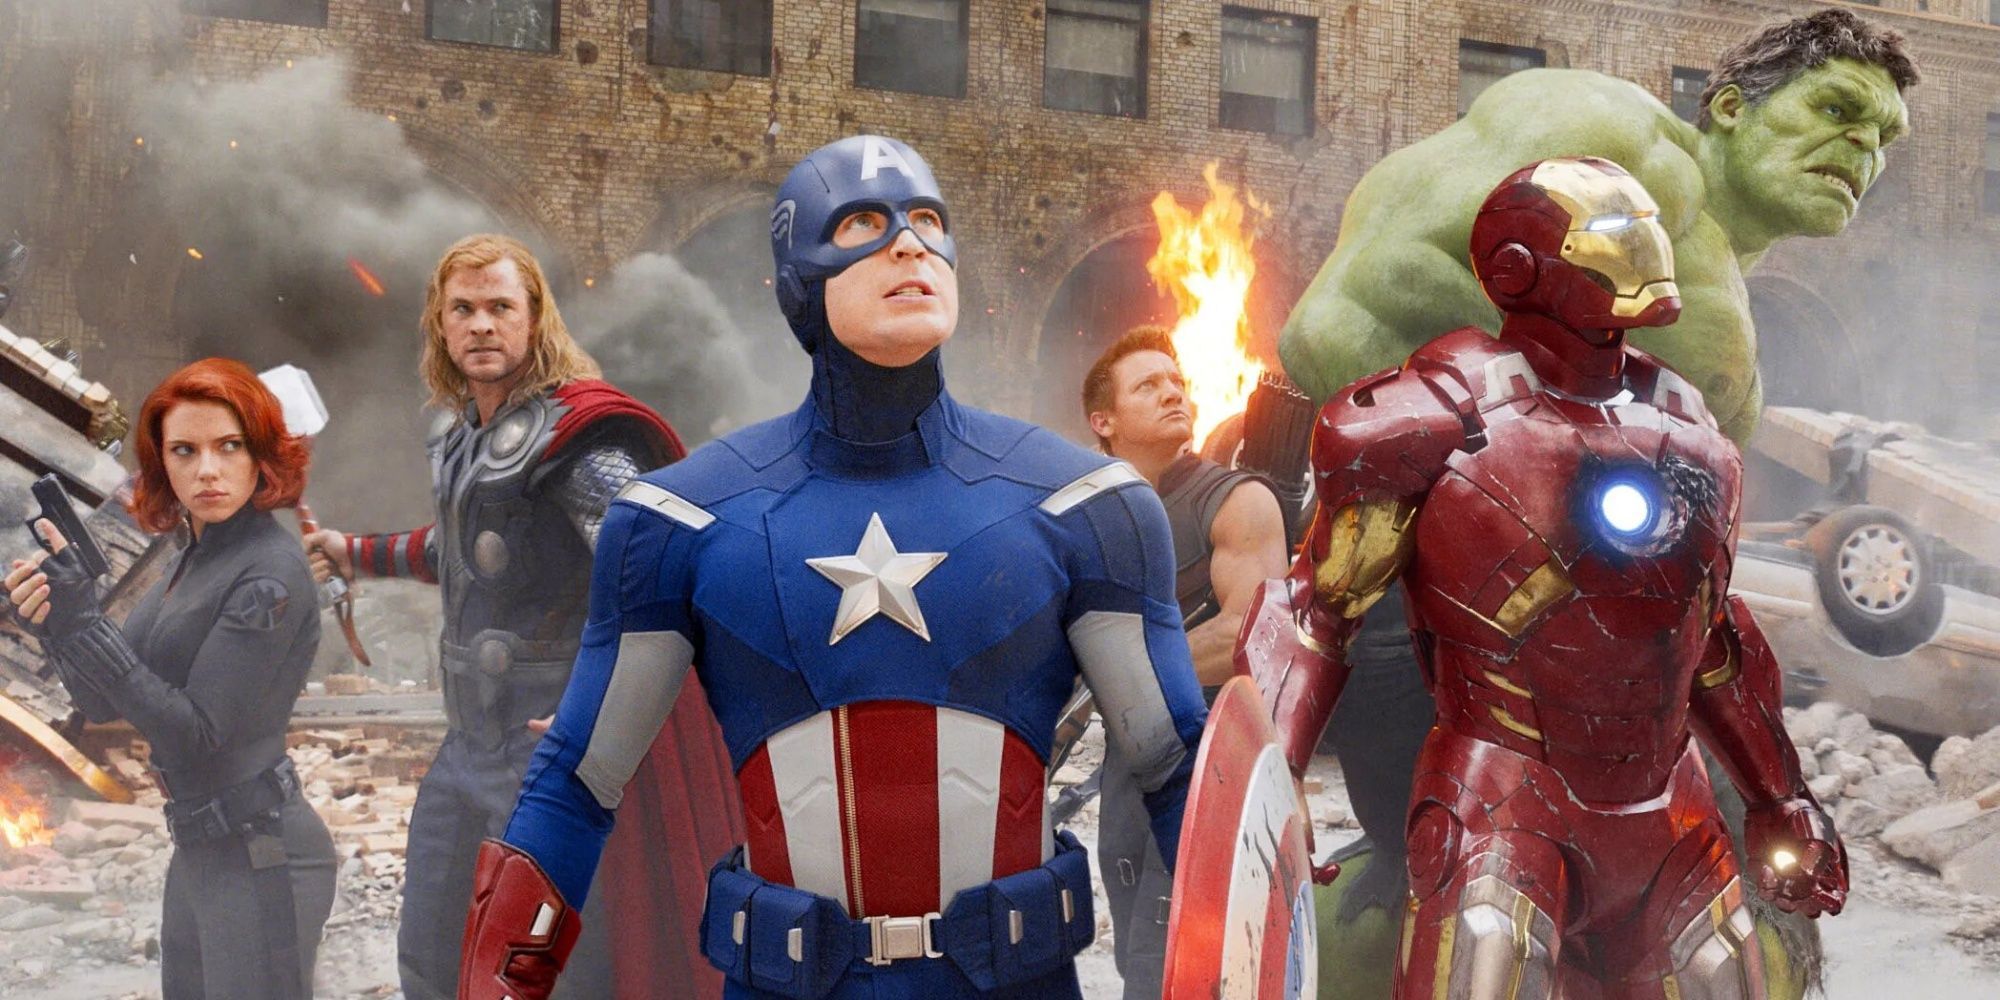 The Avengers assemble in the Battle of New York scene in The Avengers